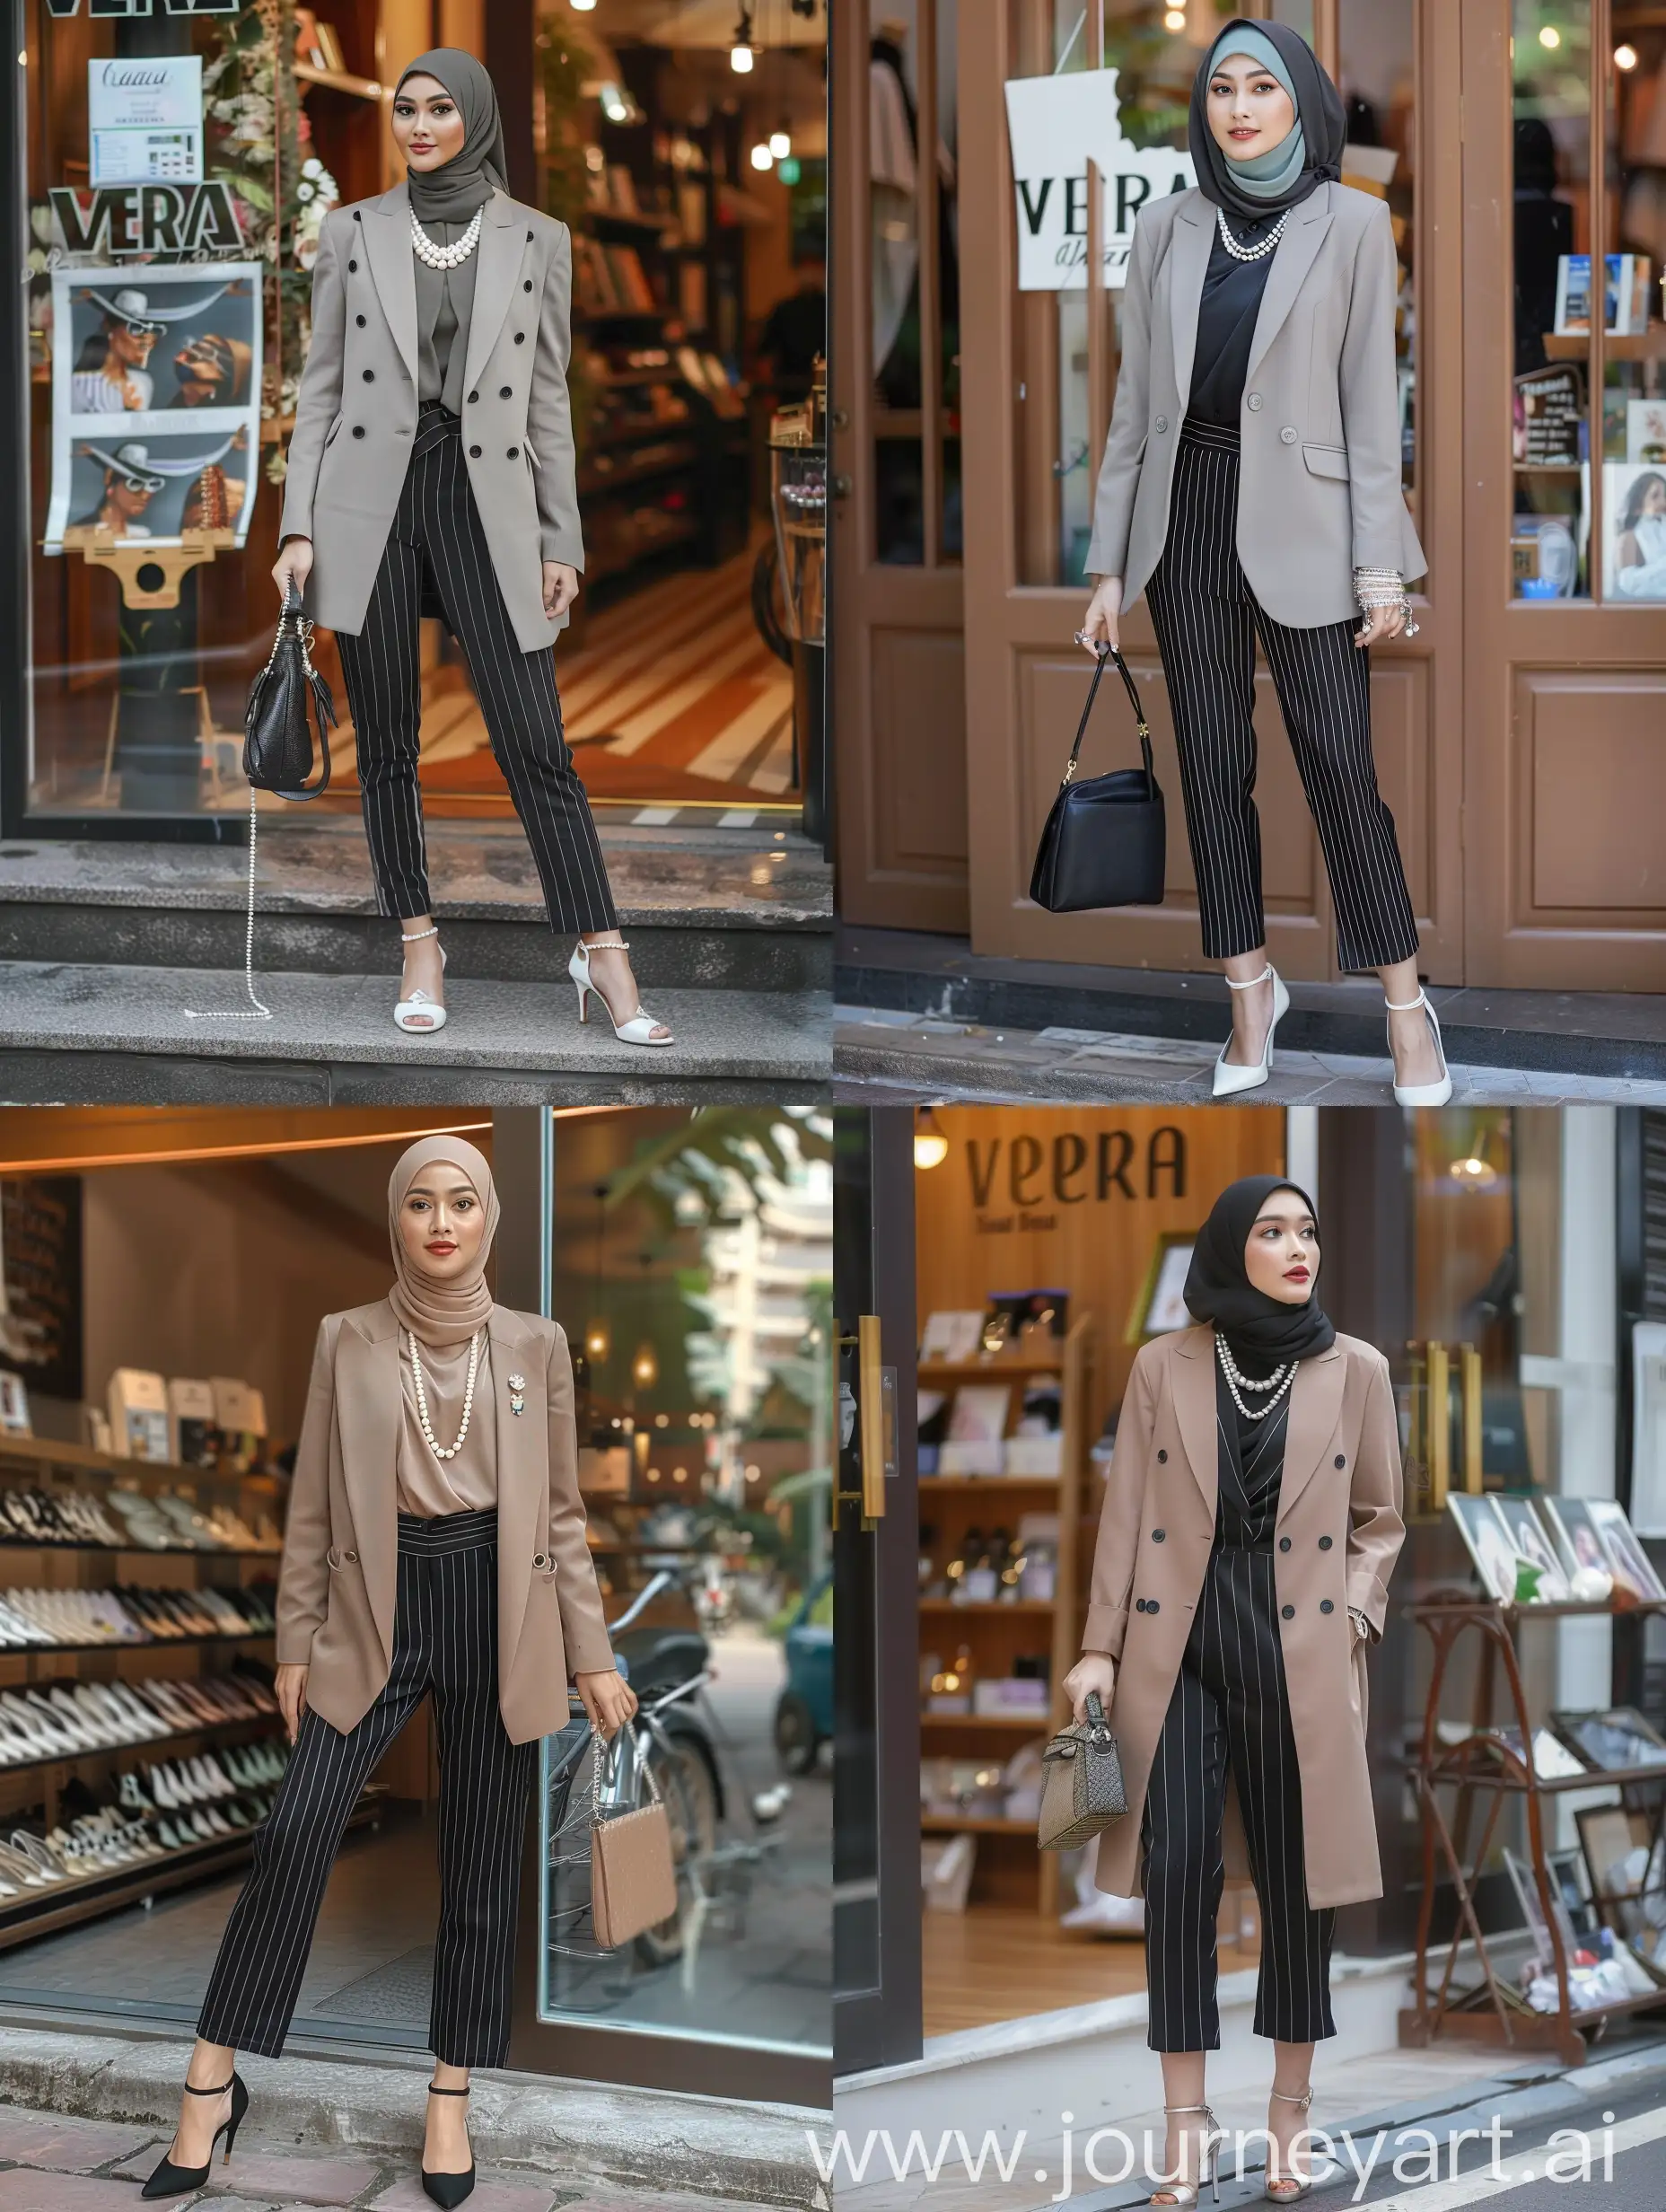 Stylish-Indonesian-Hijab-Woman-Shopping-at-Vera-Store